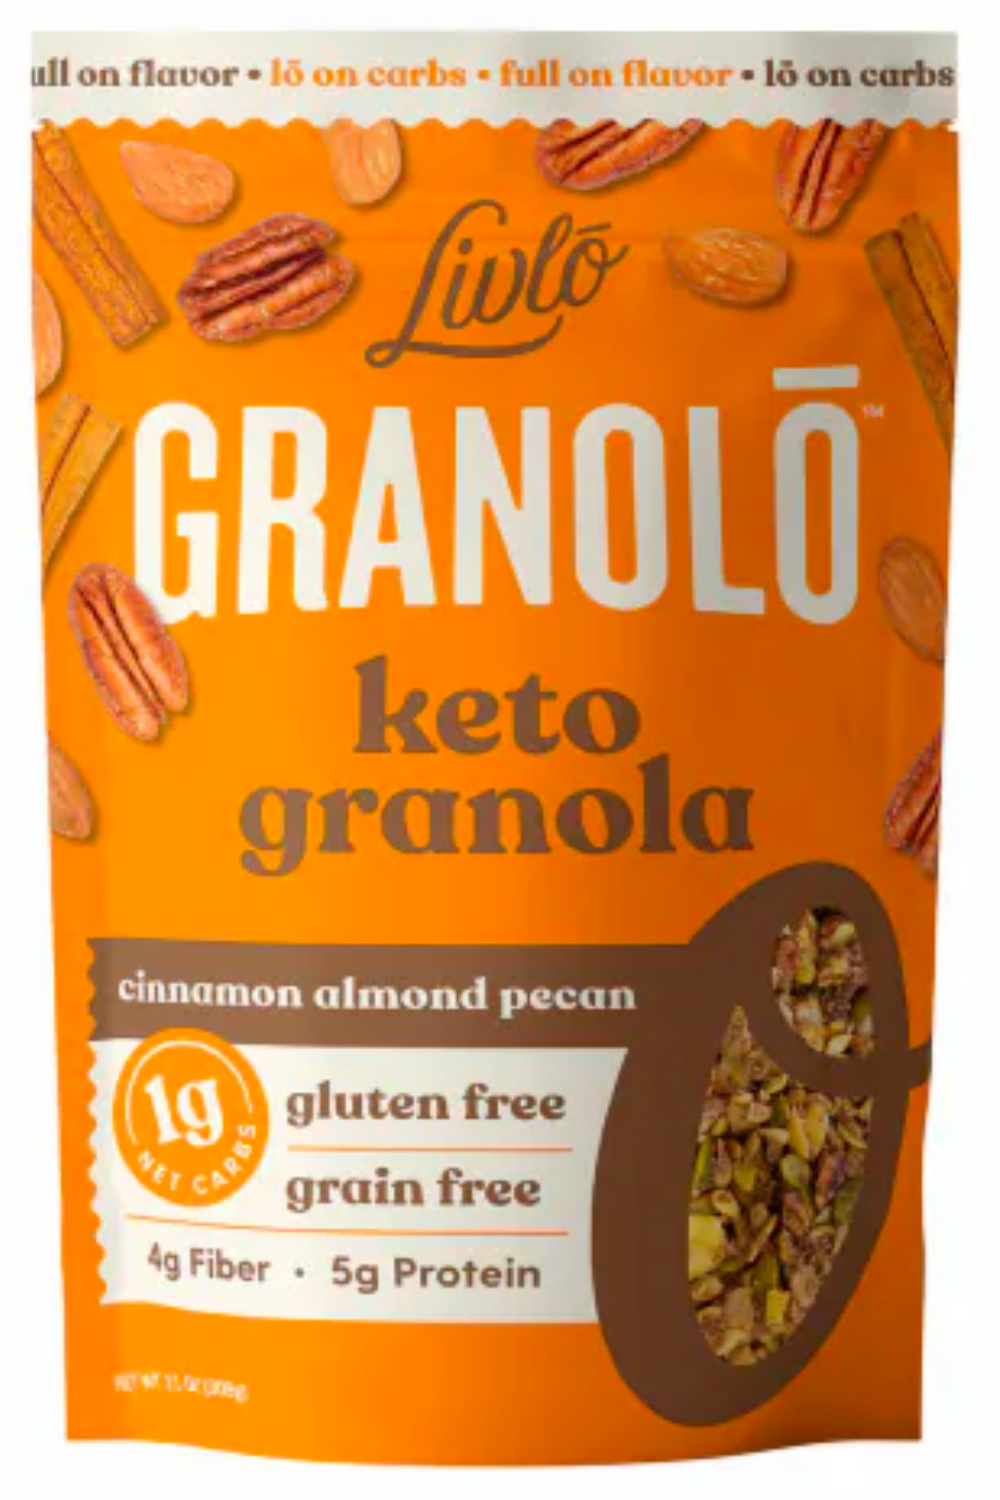 Granolo Keto Granola- "Cinnamon Almond Pecan", Cinnamon Almond Pecan Keto by Livlo, 11 oz box